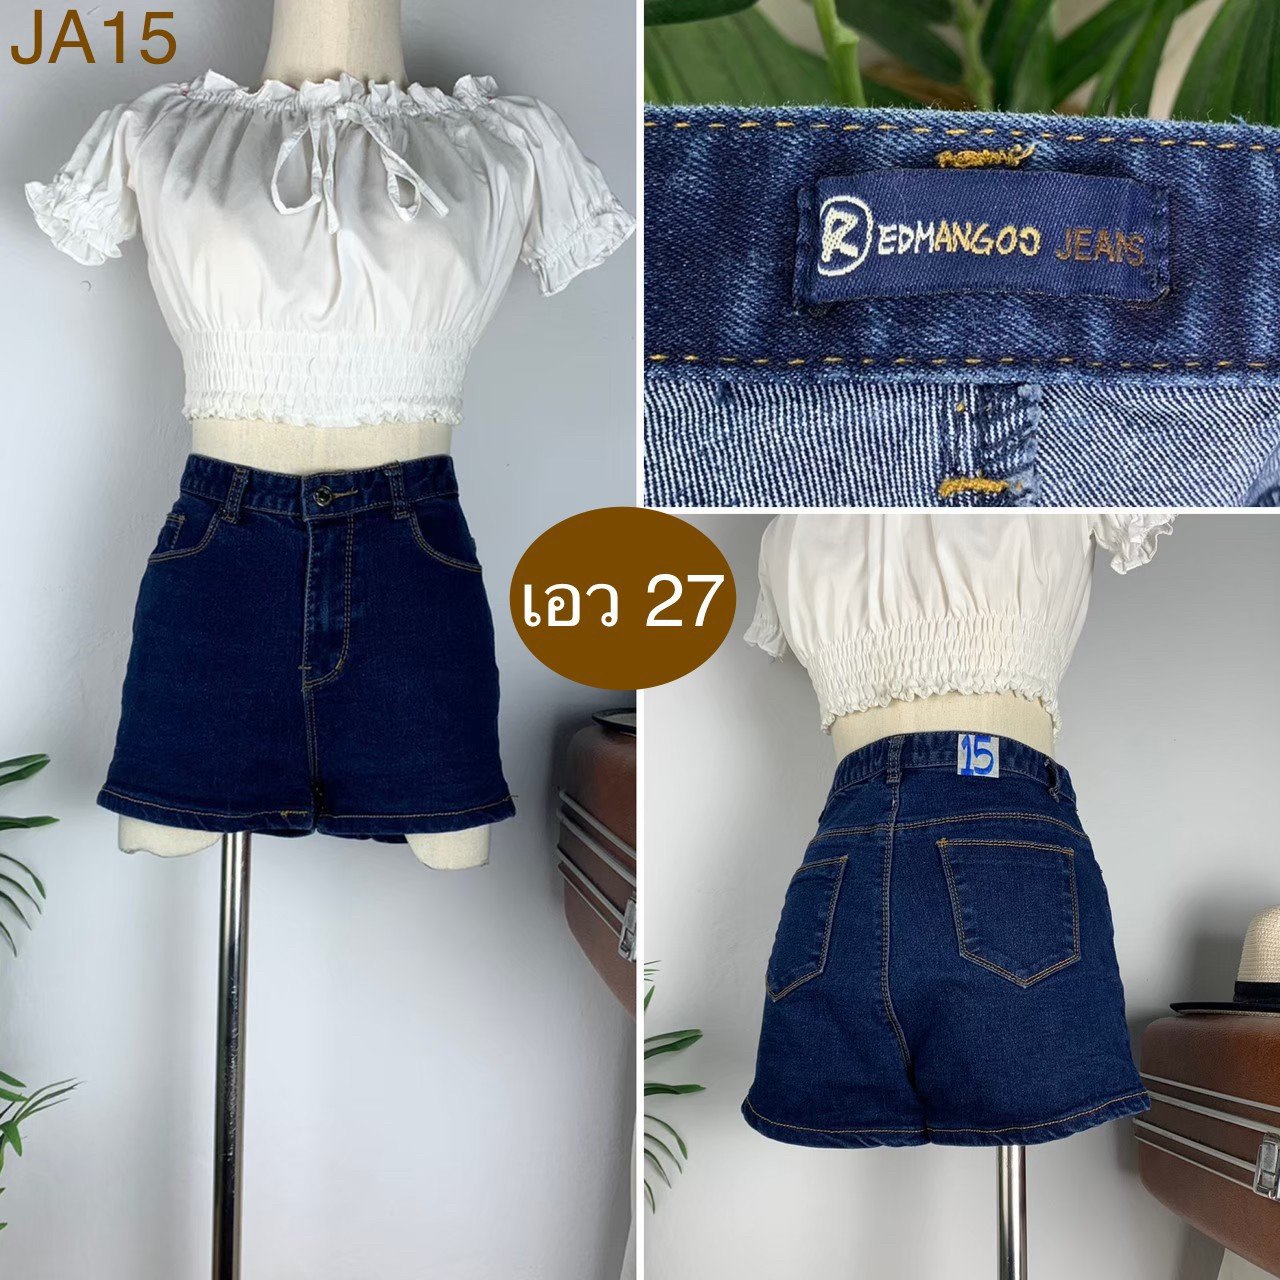 ♥️ รหัสJA15 ▪️ป้าย Redmangoc Jeans  ▪️ เอว 27" สะโพก 33-35" ต้นขา 21-22" ▪️เป้า 10.5" ยาว 11" (นิ้ว)